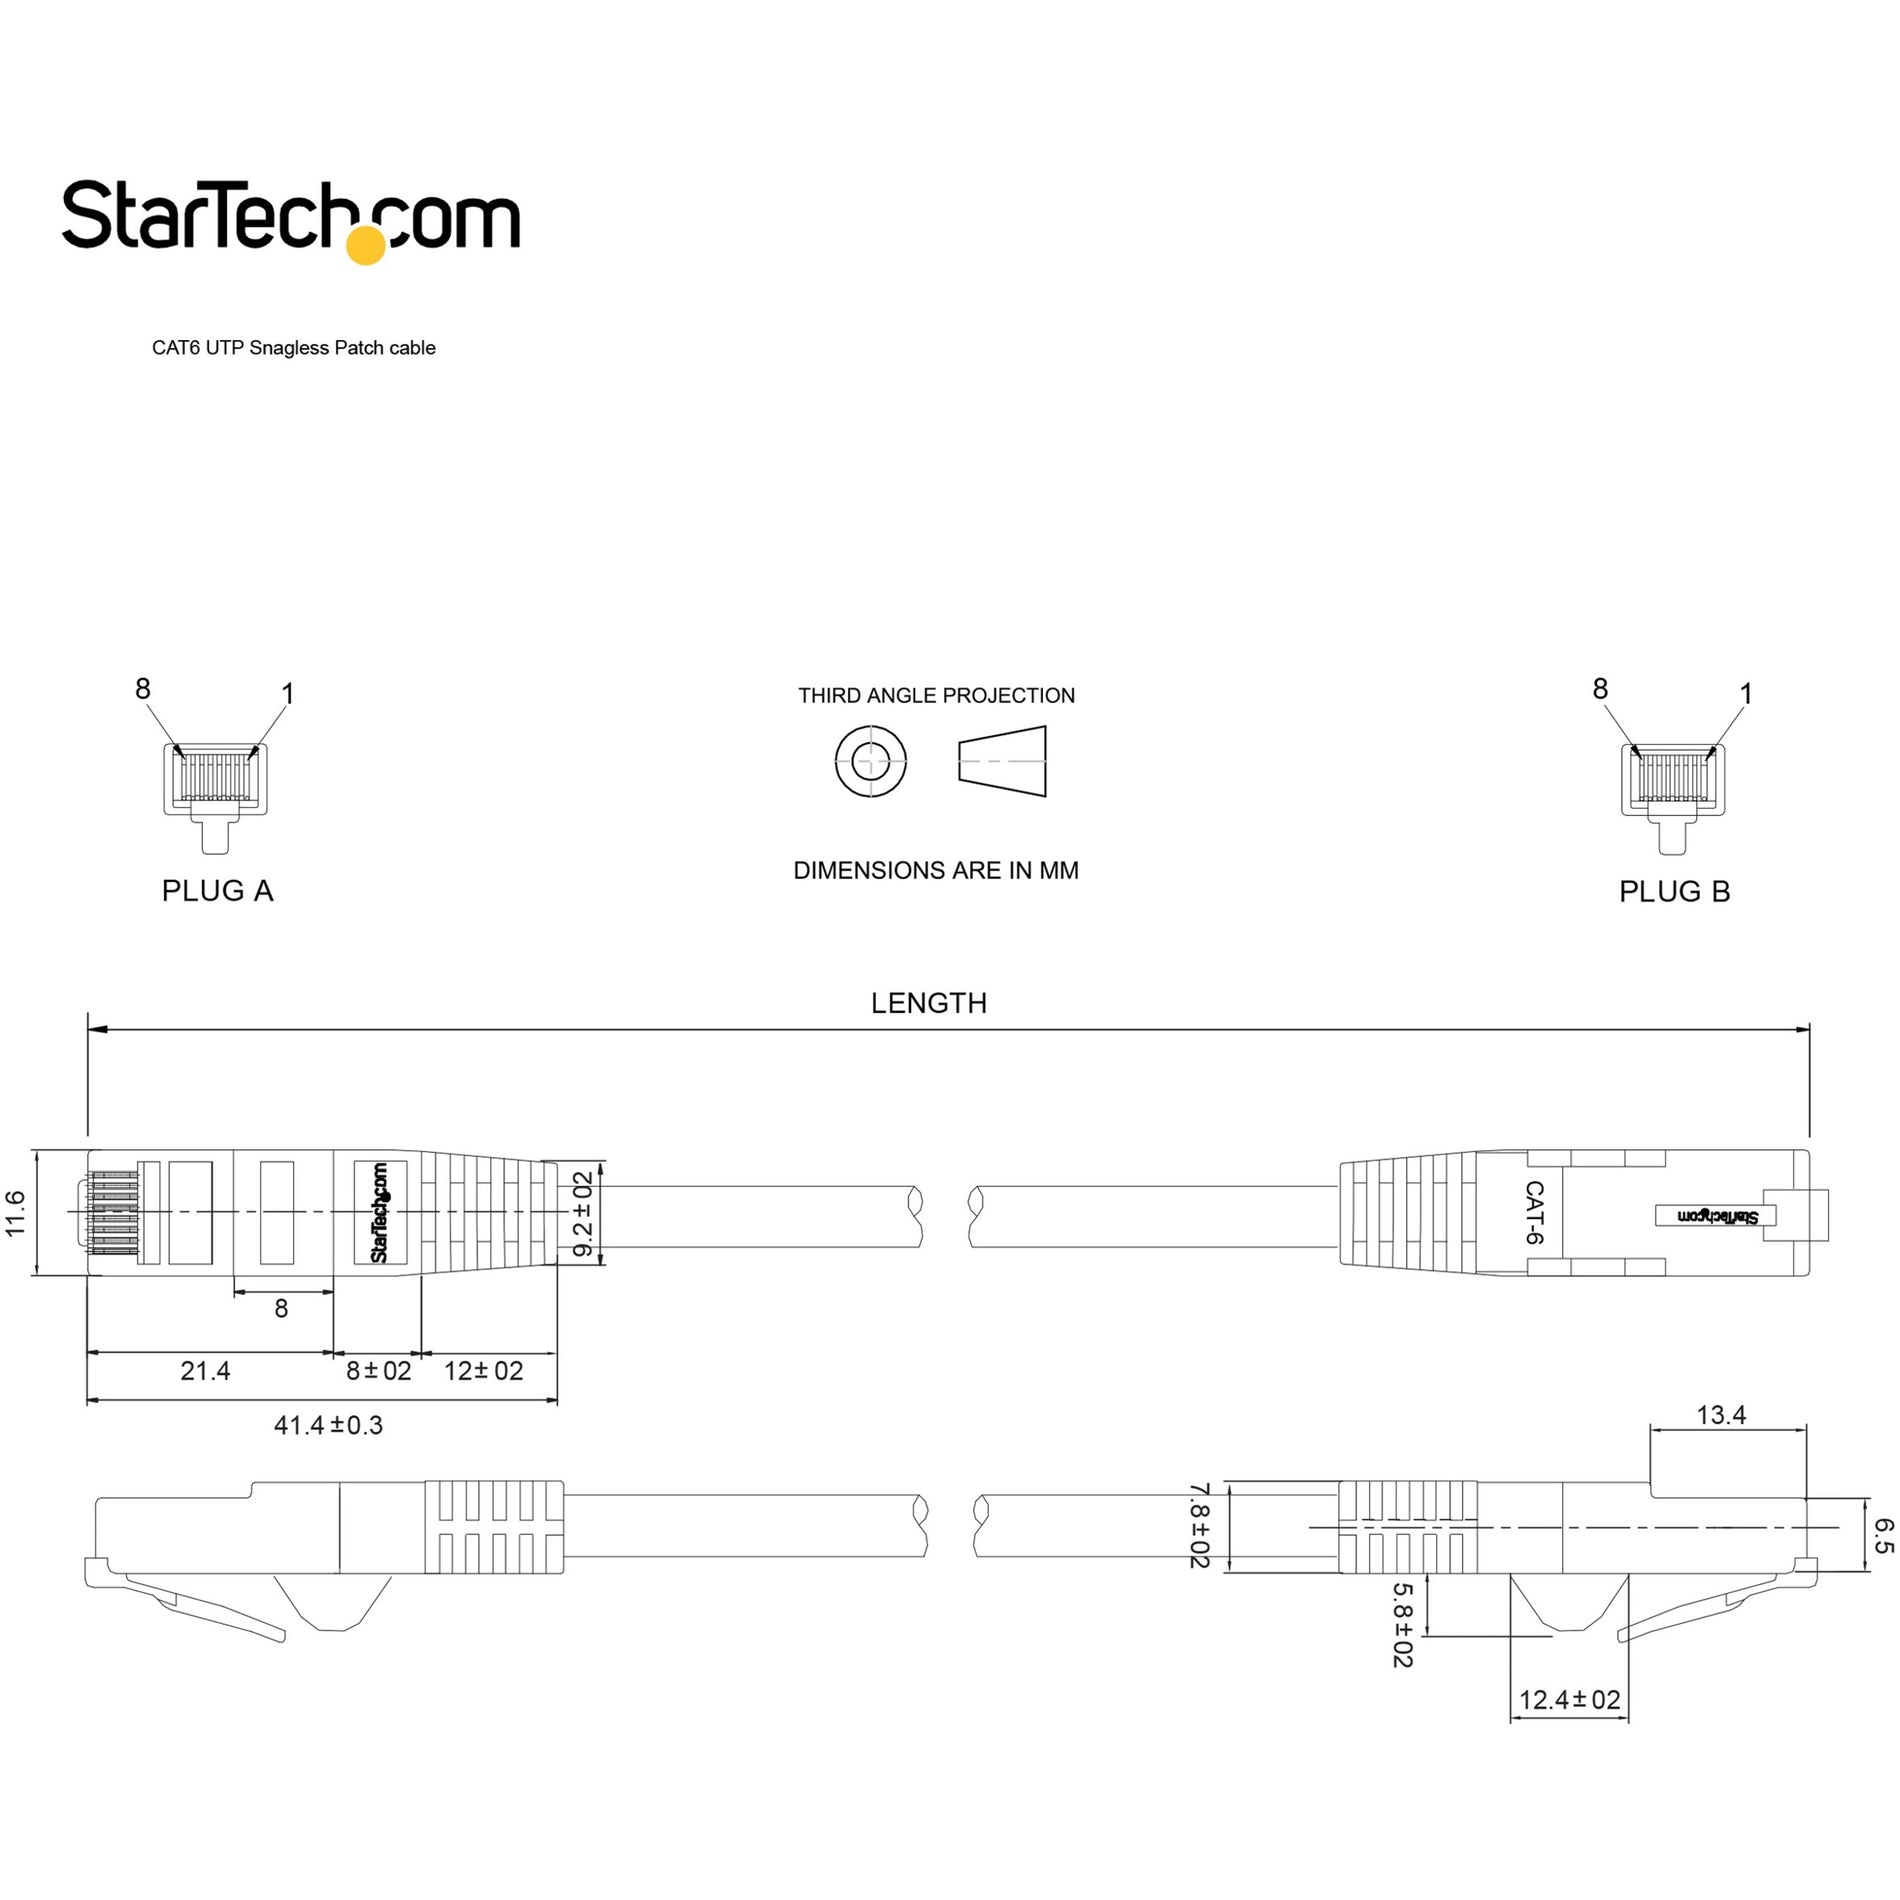 StarTech.com N6PATCH100BK 100 ft ブラック Snagless Cat6 UTP パッチケーブル、PoE、10 Gbit/s データ転送速度 ブランド名: スターテックドットコム